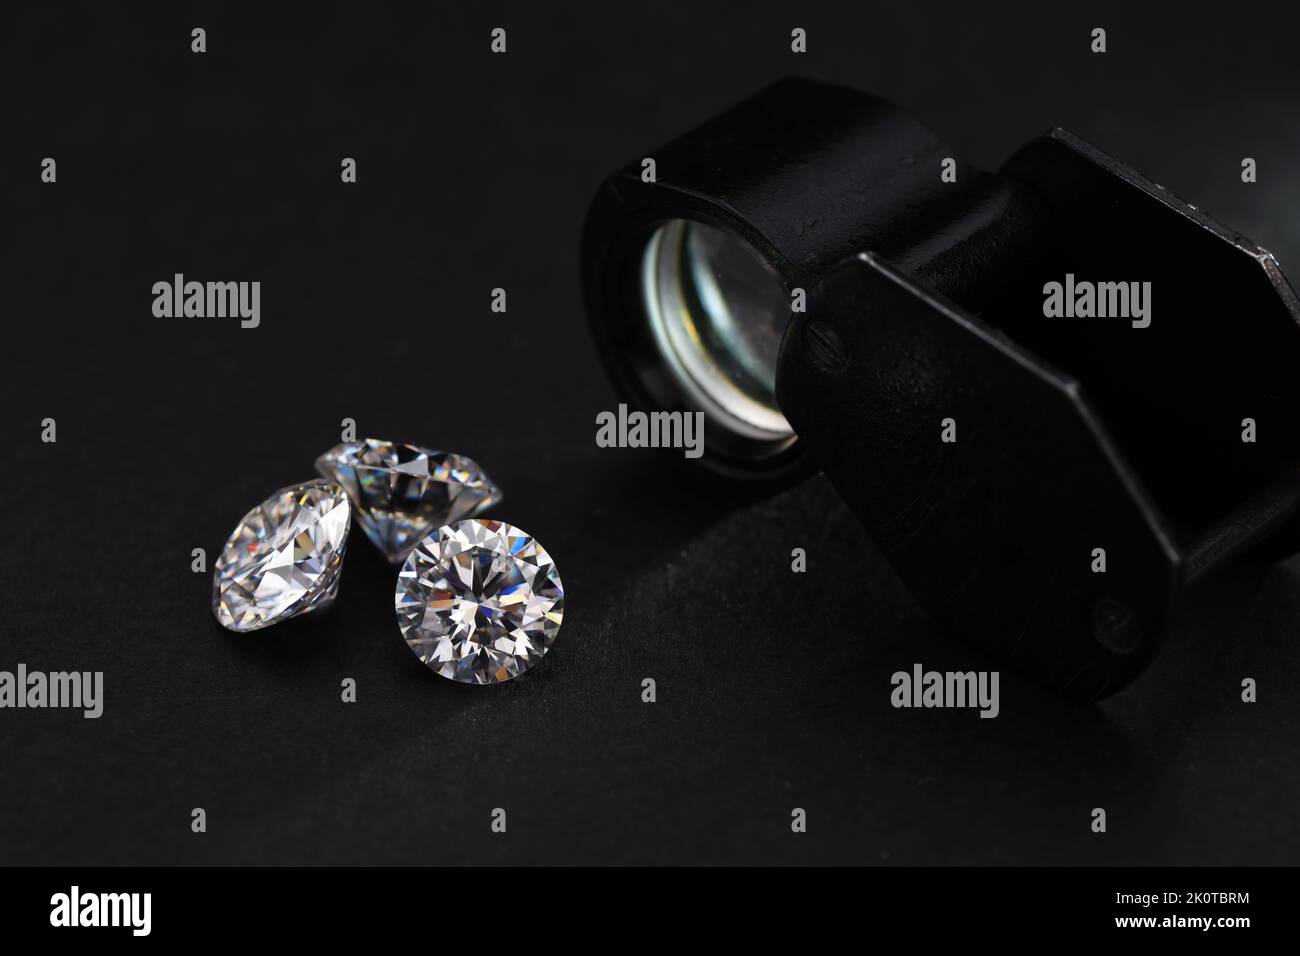 Precious Big Carats Round Cut Diamonds Stock Photo